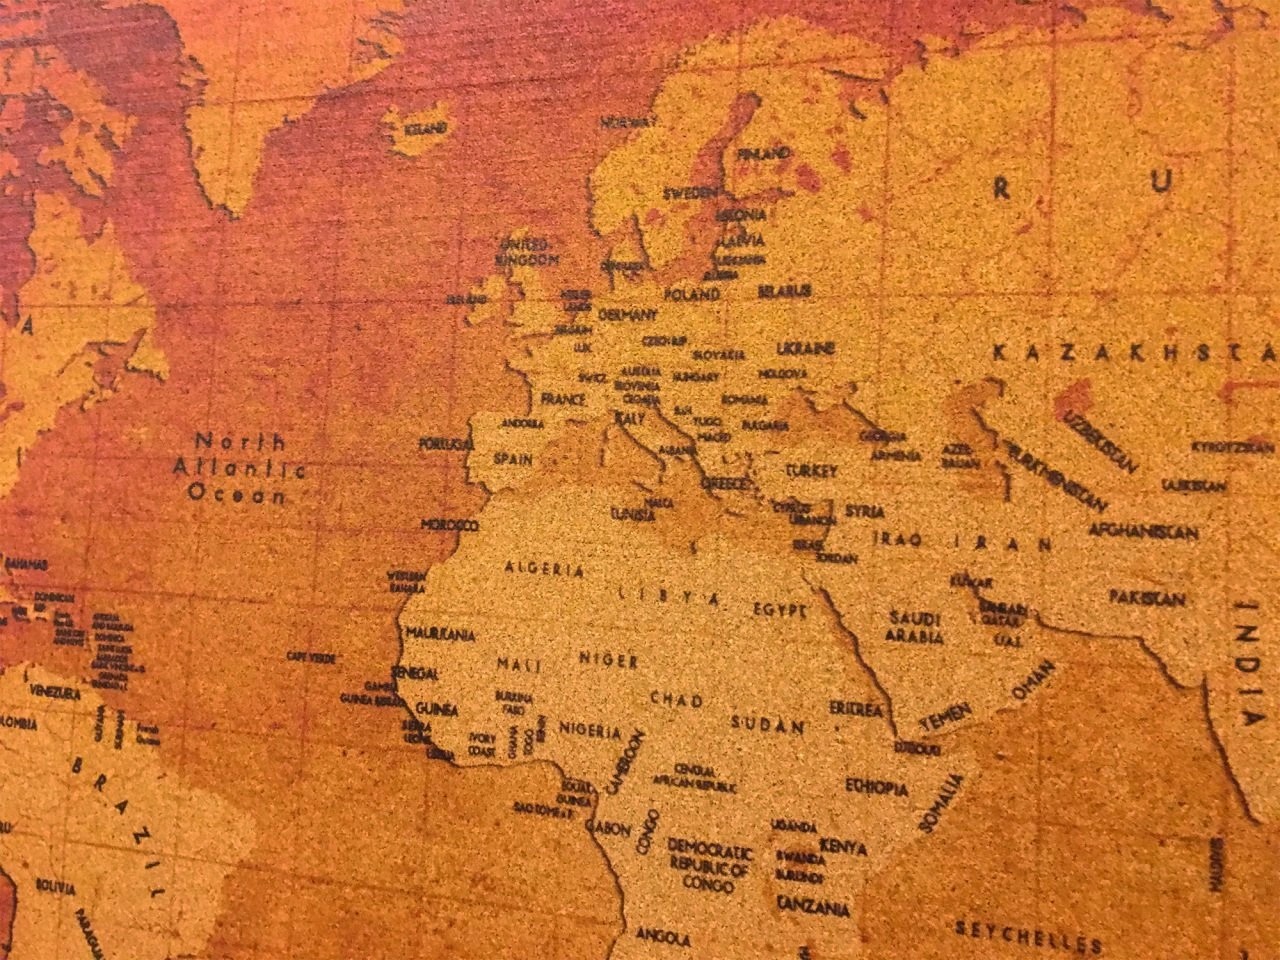 105 - Mantar Dünya Haritası (Eskitilmiş)